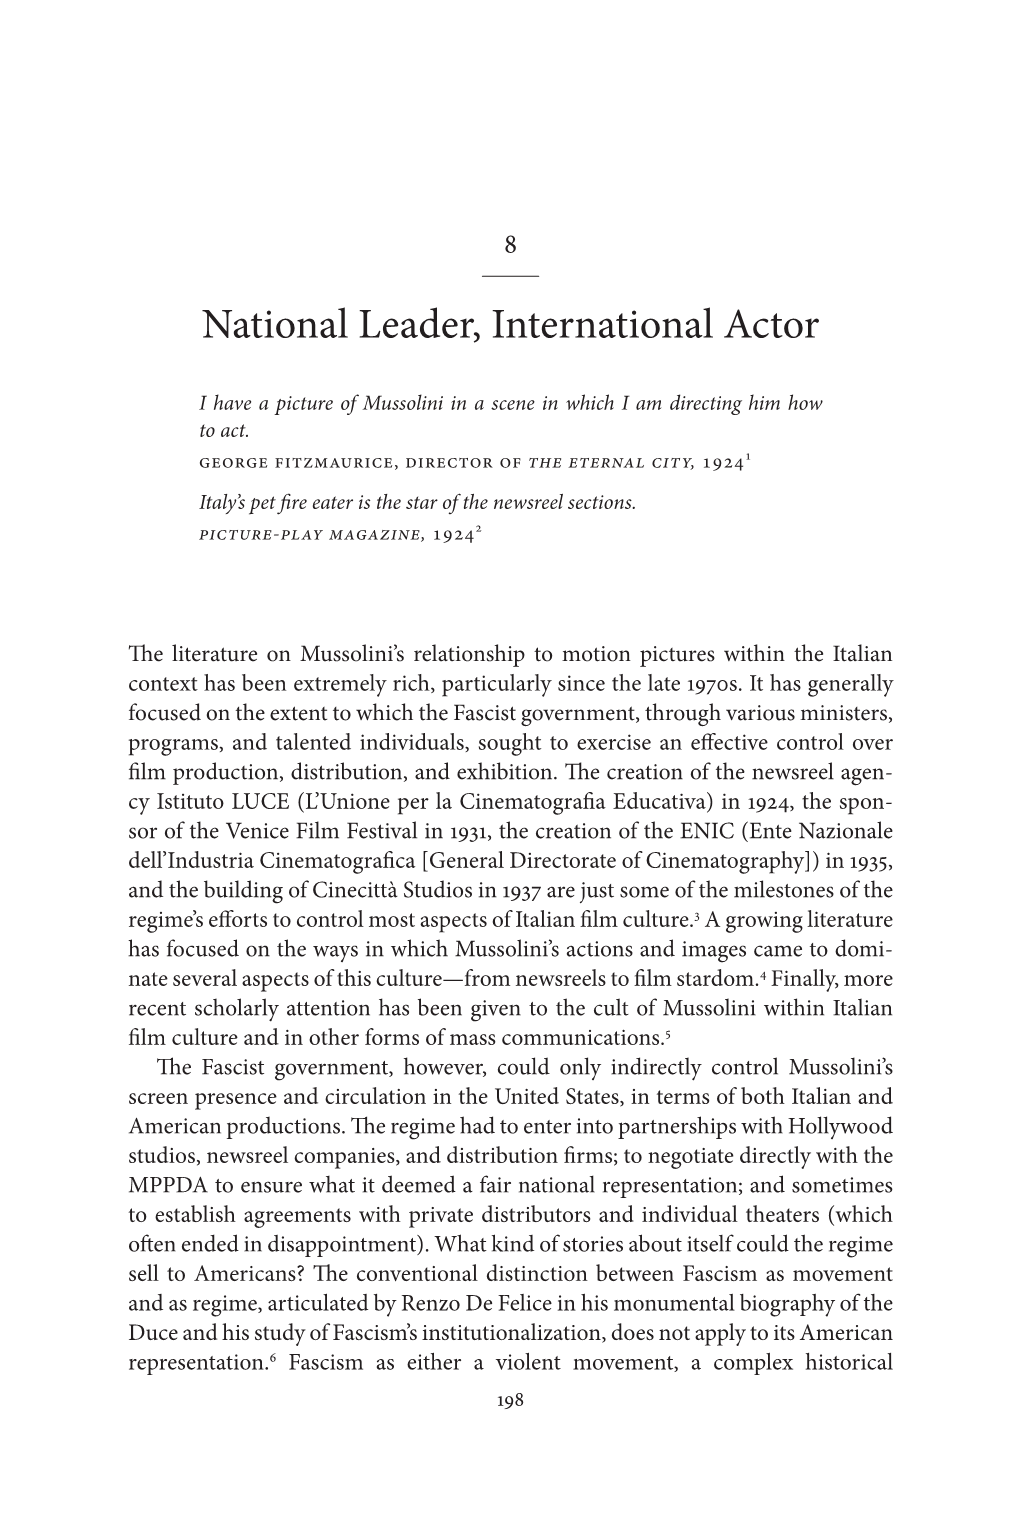 National Leader, International Actor